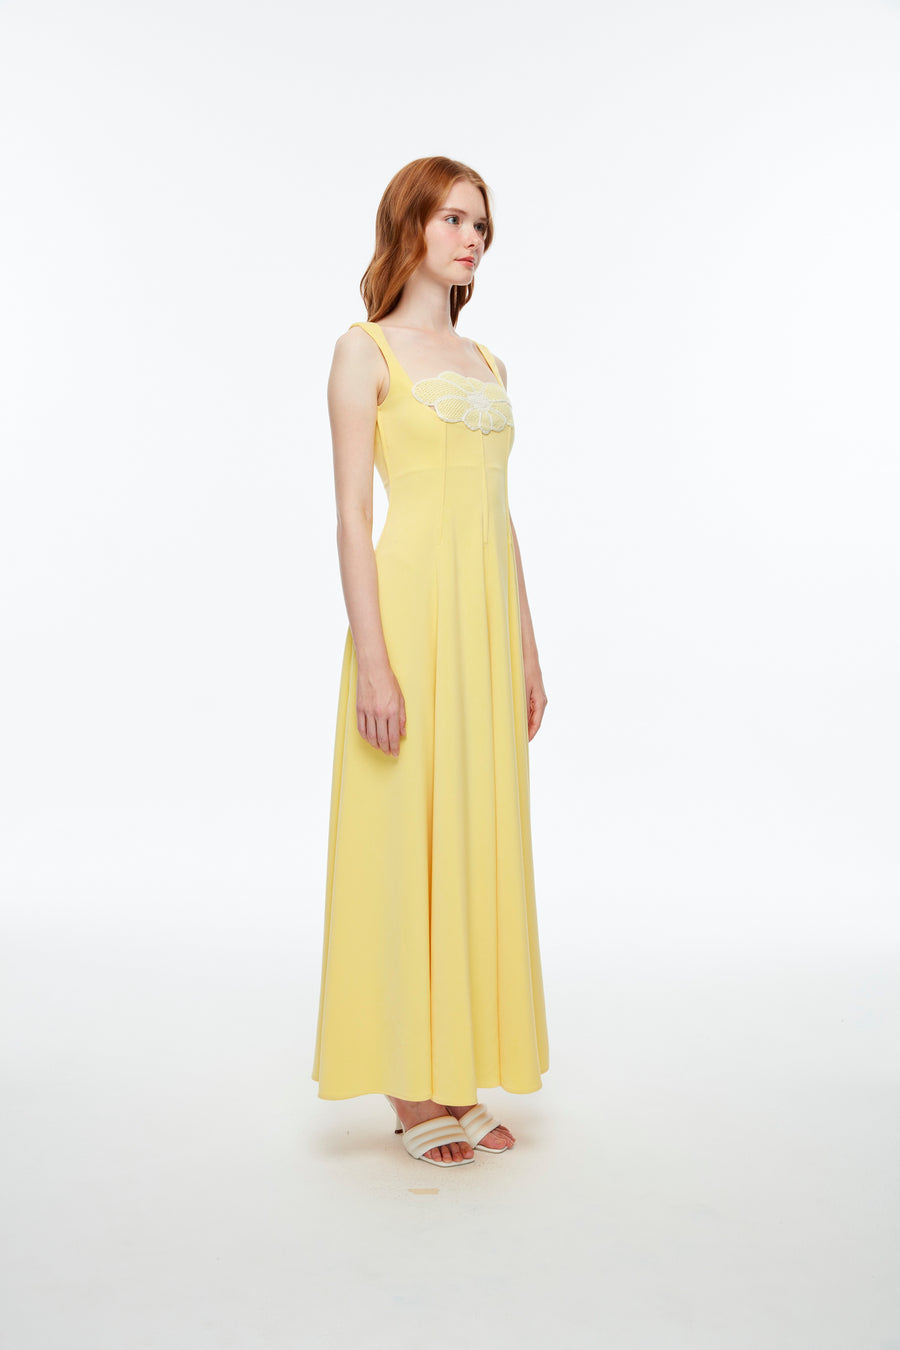 Long dress in yellow